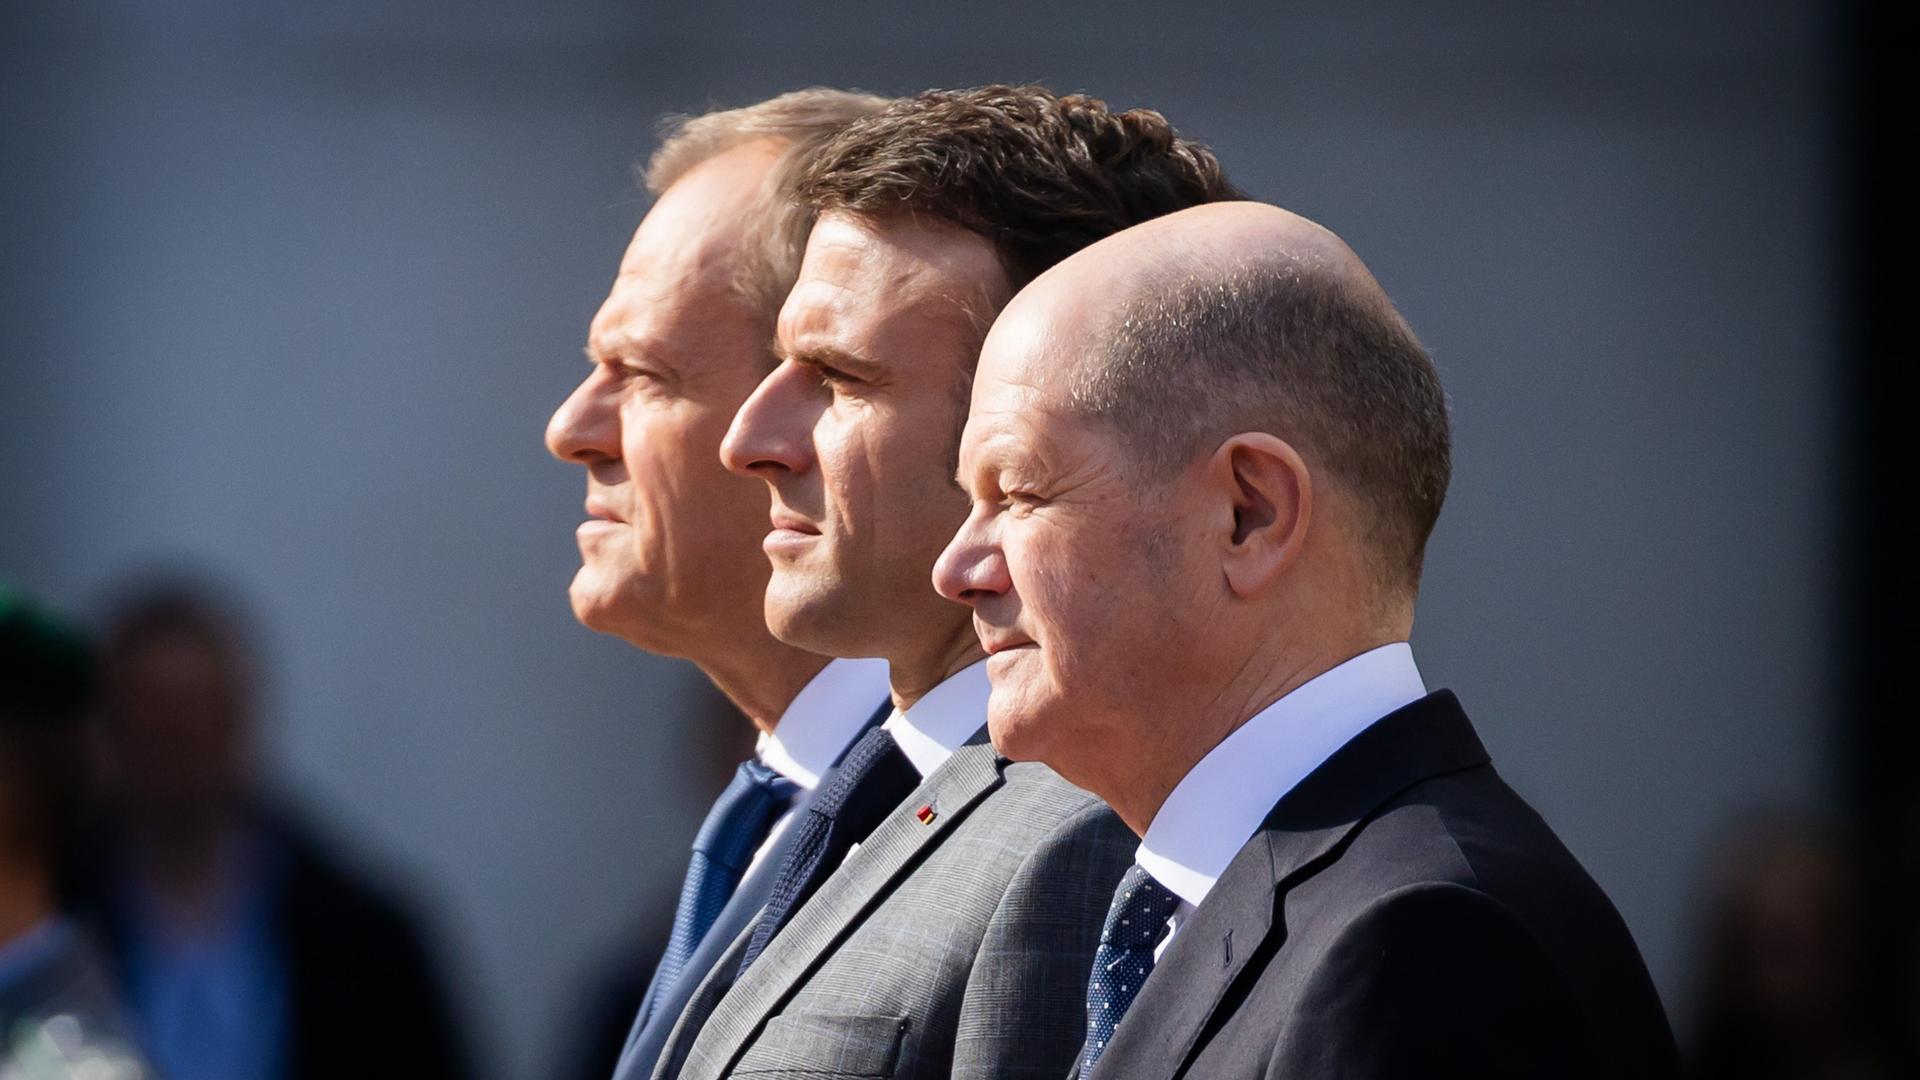 Bundeskanzler Olaf Scholz, Emmanuel Macron und Donald Tusk im Profil